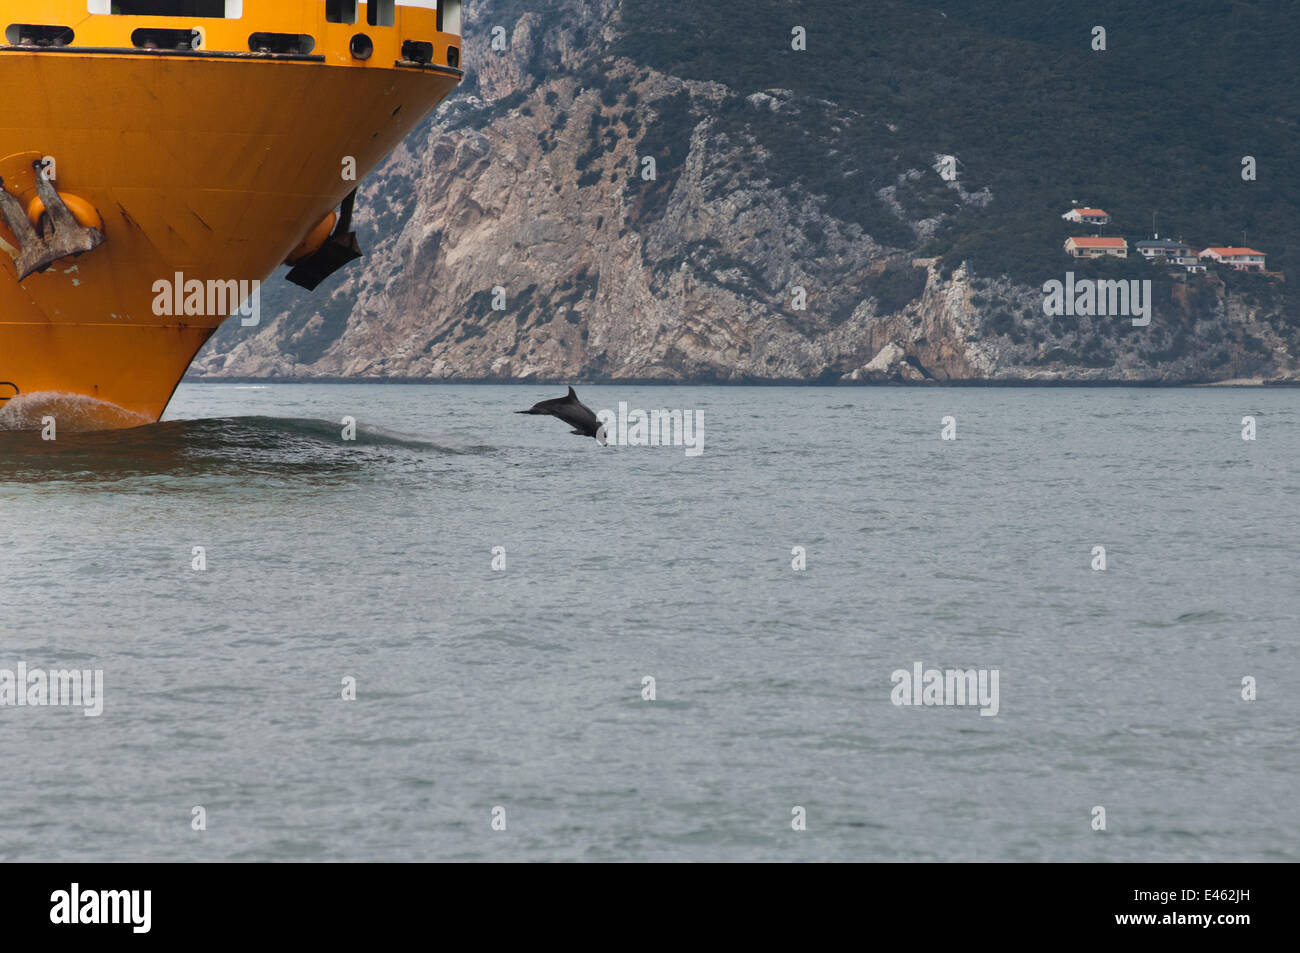 Bottlenose dolphin (Tursiops truncatus) leaping in front of a cargo ship, Sado Estuary, Portugal, September Stock Photo